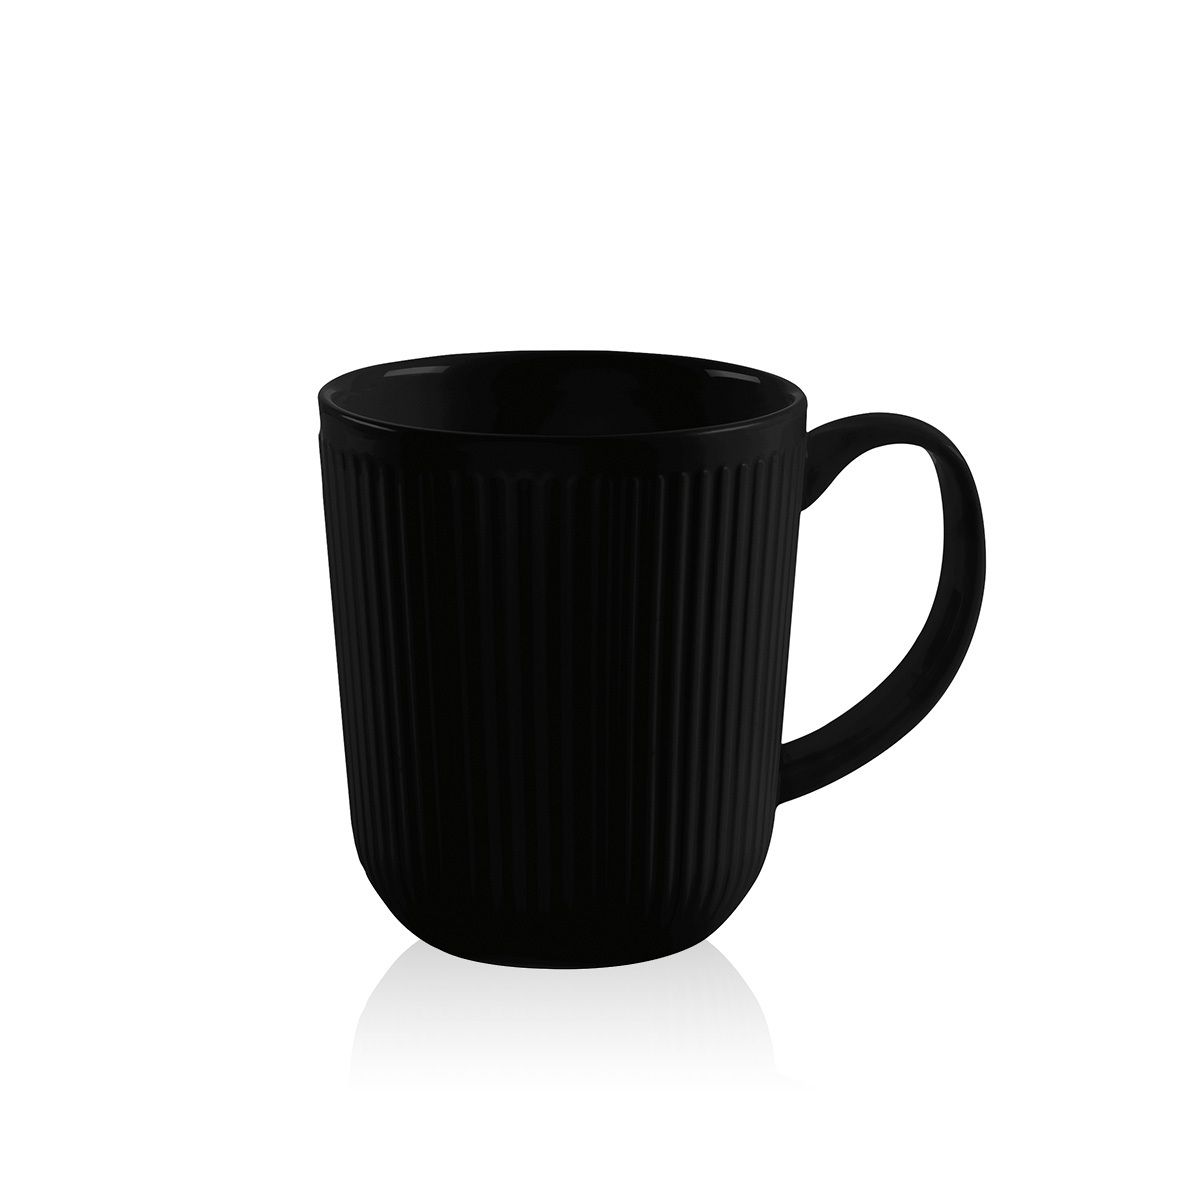 Bodum Douro Coffee Mug Porcelain Black Matt, 2 Pcs.